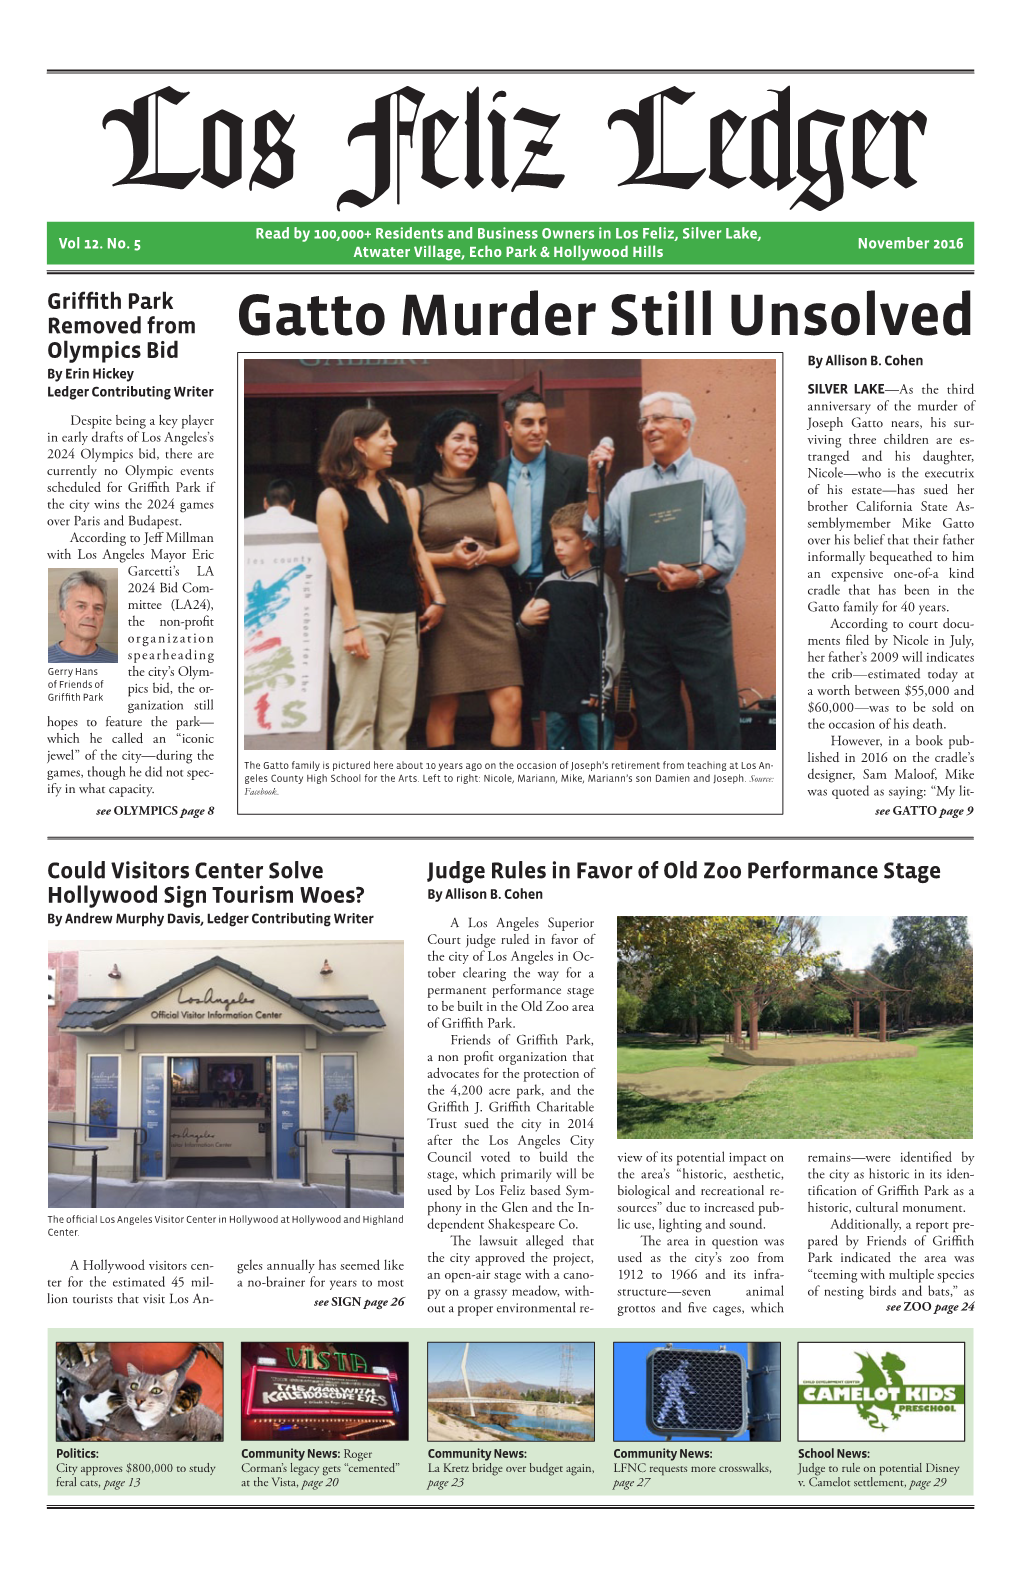 Gatto Murder Still Unsolved Olympics Bid by Allison B